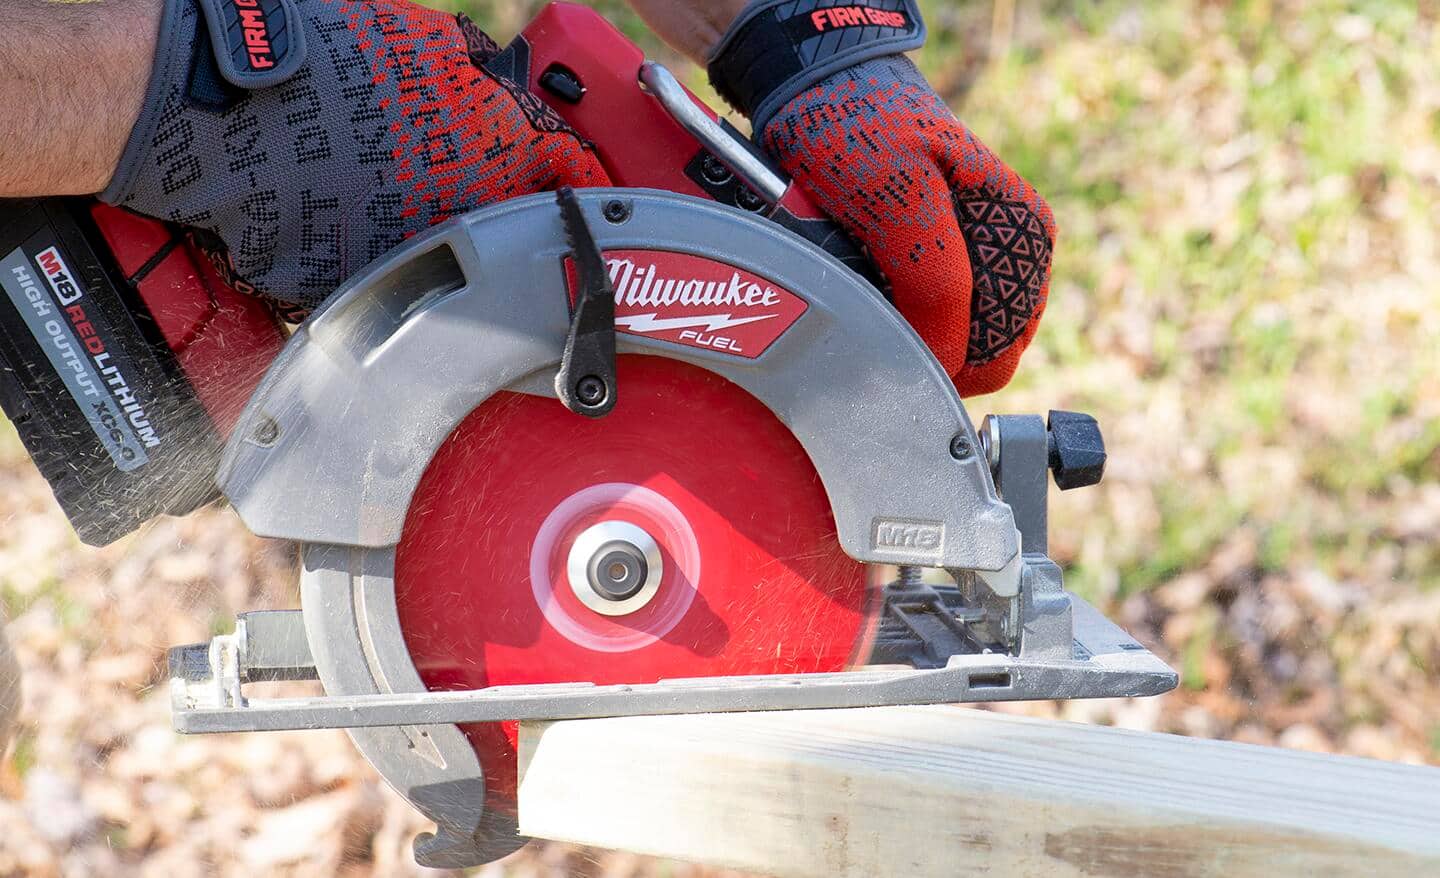 A circular saw being used to cut lumber.